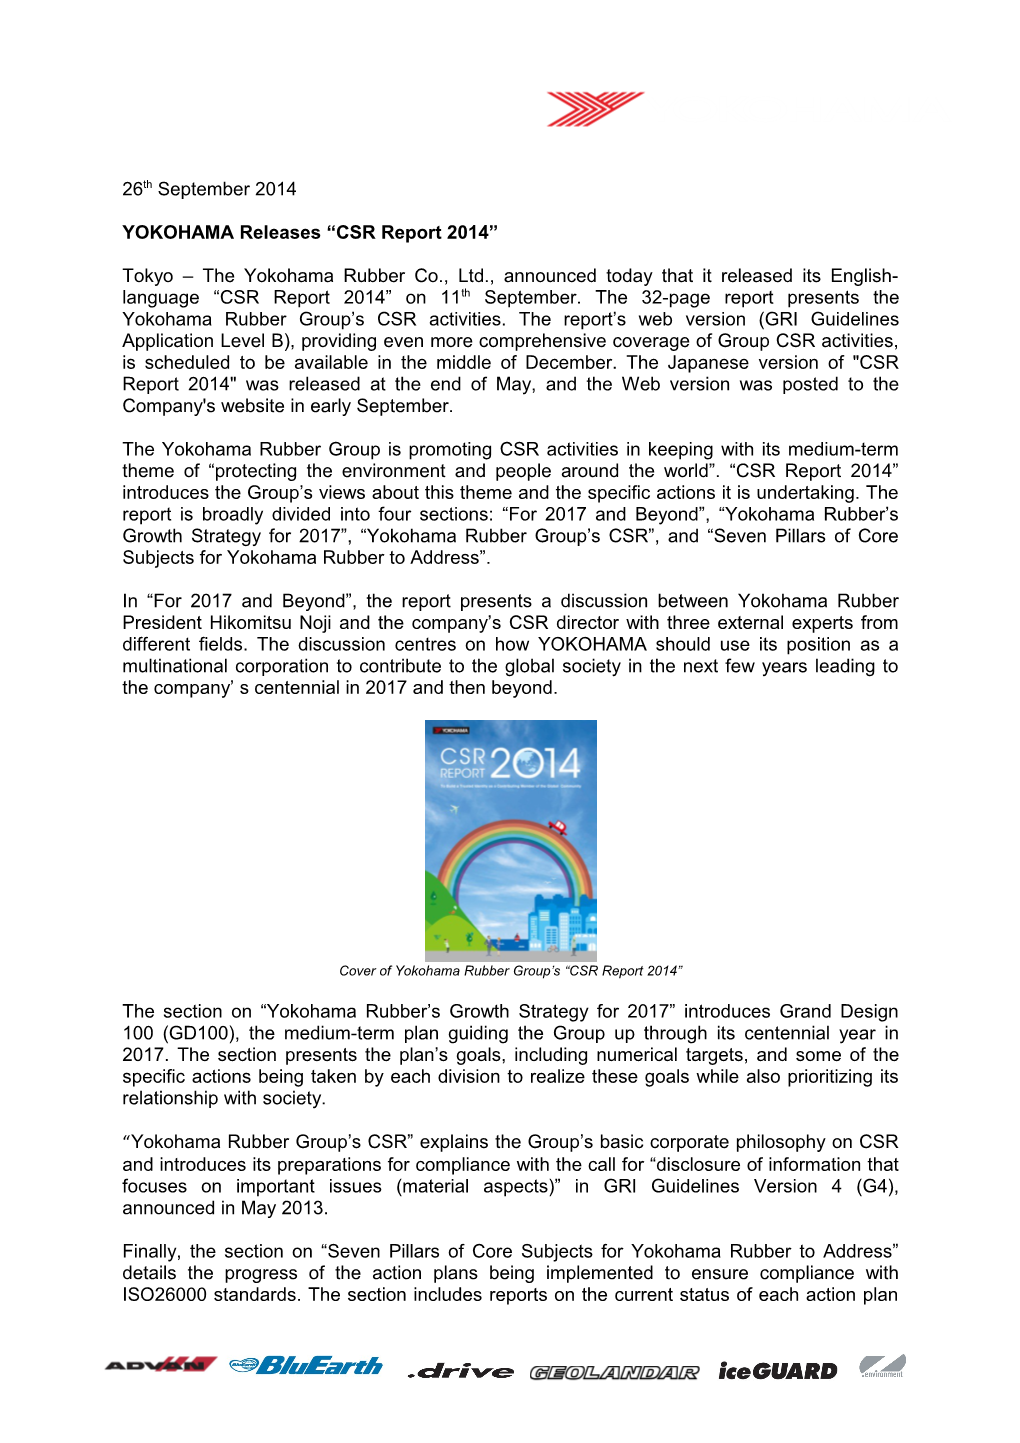 YOKOHAMA Releases CSR Report 2014